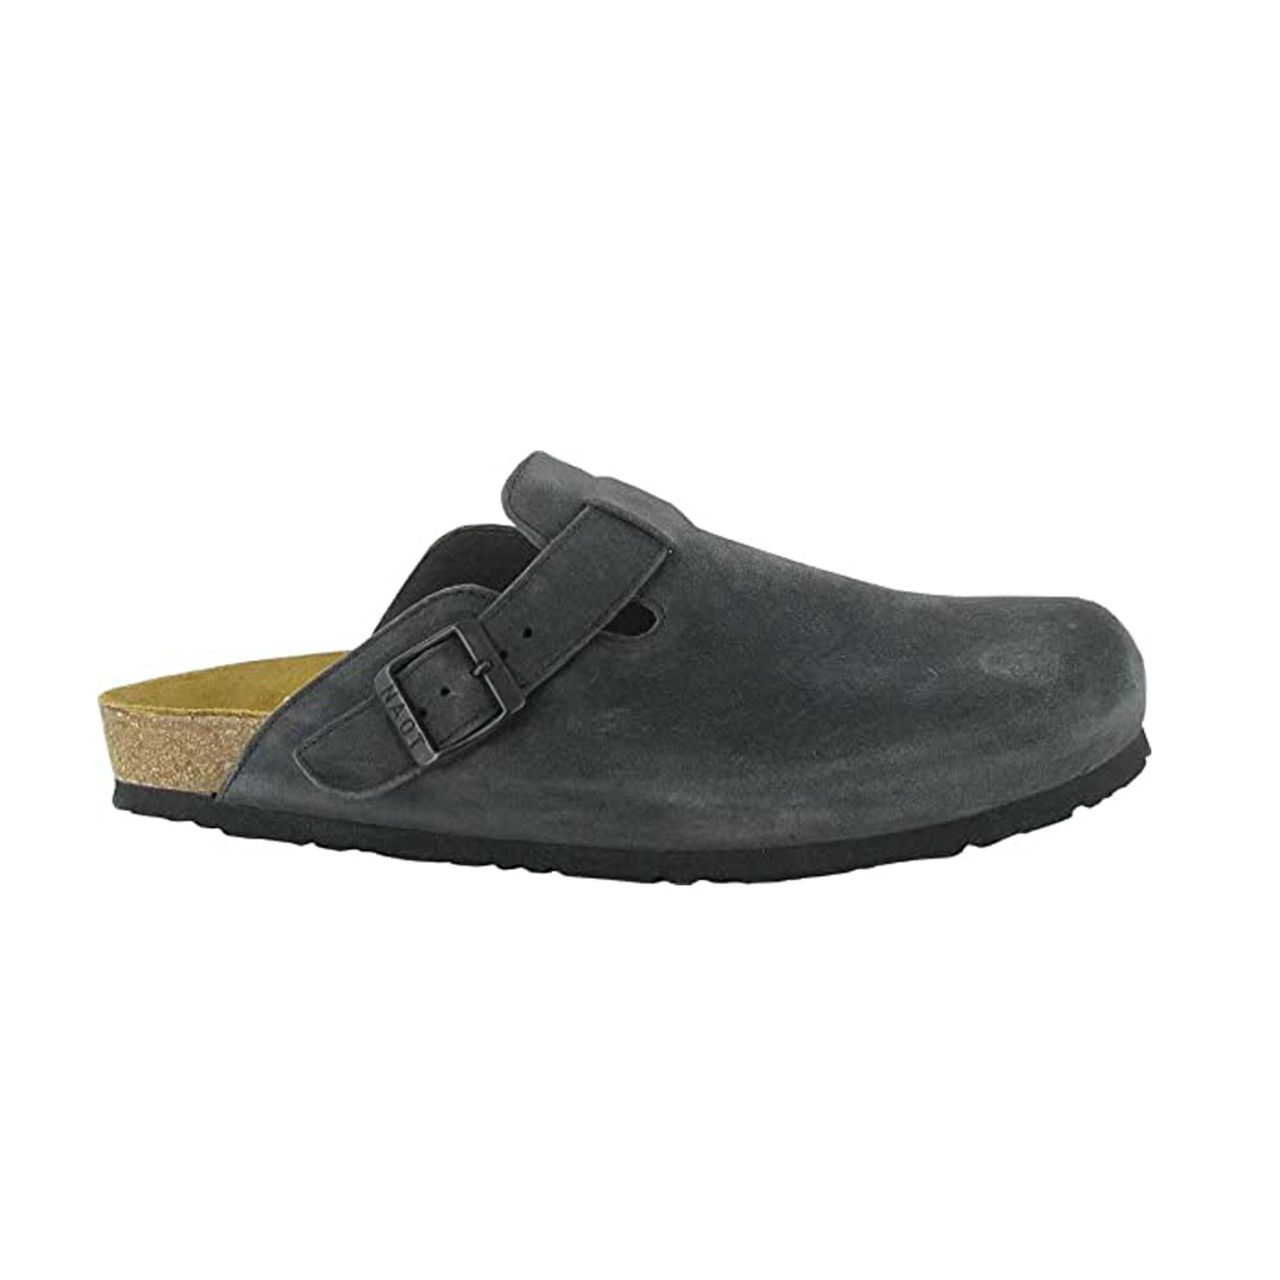 Naot Men's Spring Clog - Blue | Discount Naot Men's Shoes & More ...